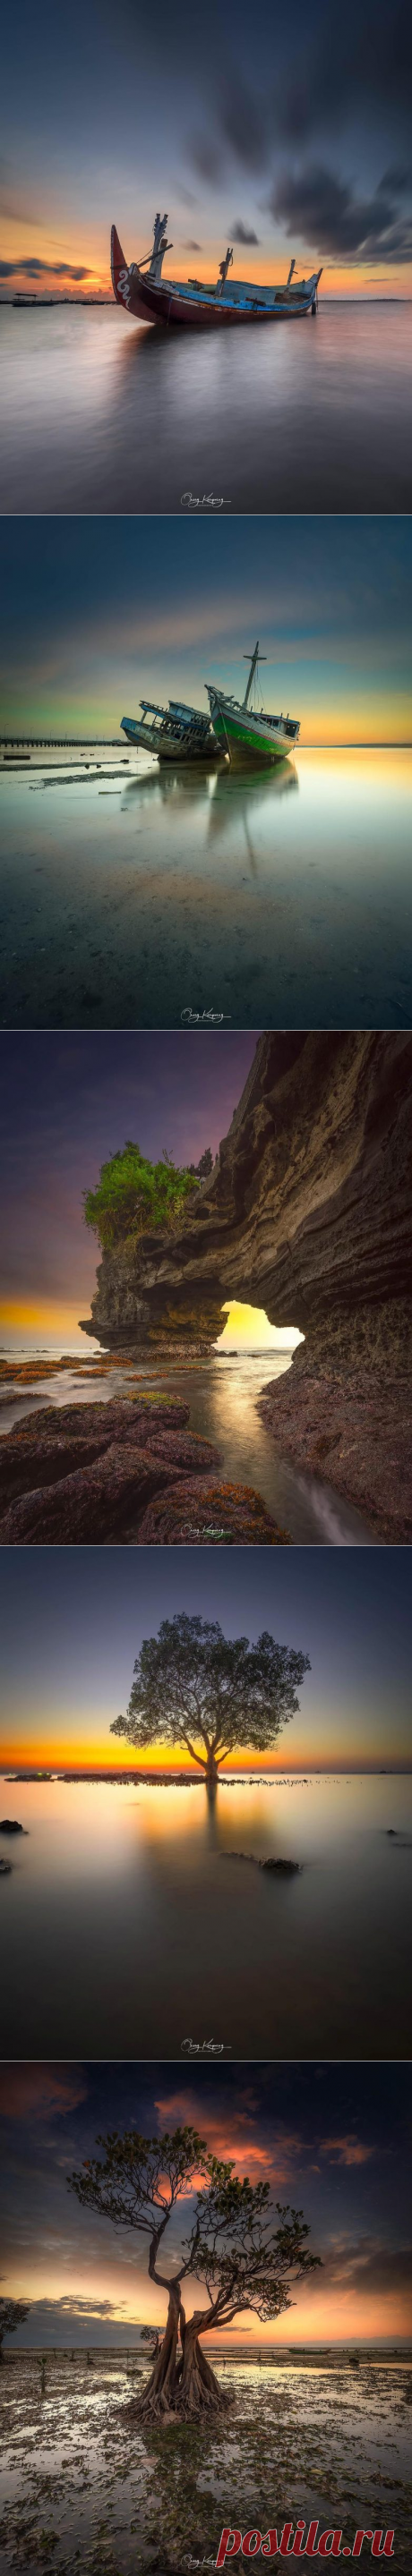 Страна-загадка: экзотическая Индонезия на фото / Туристический спутник